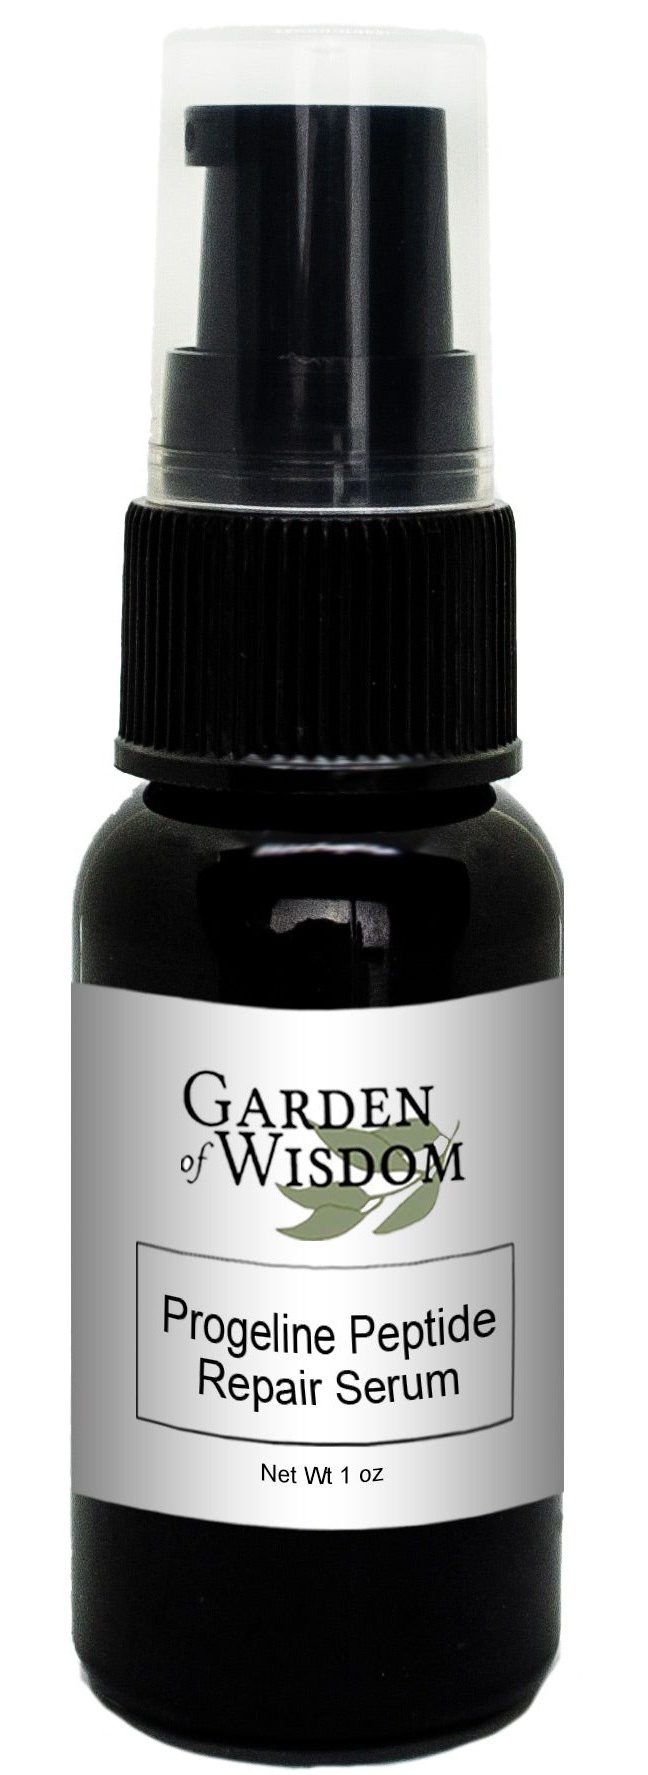 Garden of Wisdom Progeline Peptide Repair Serum